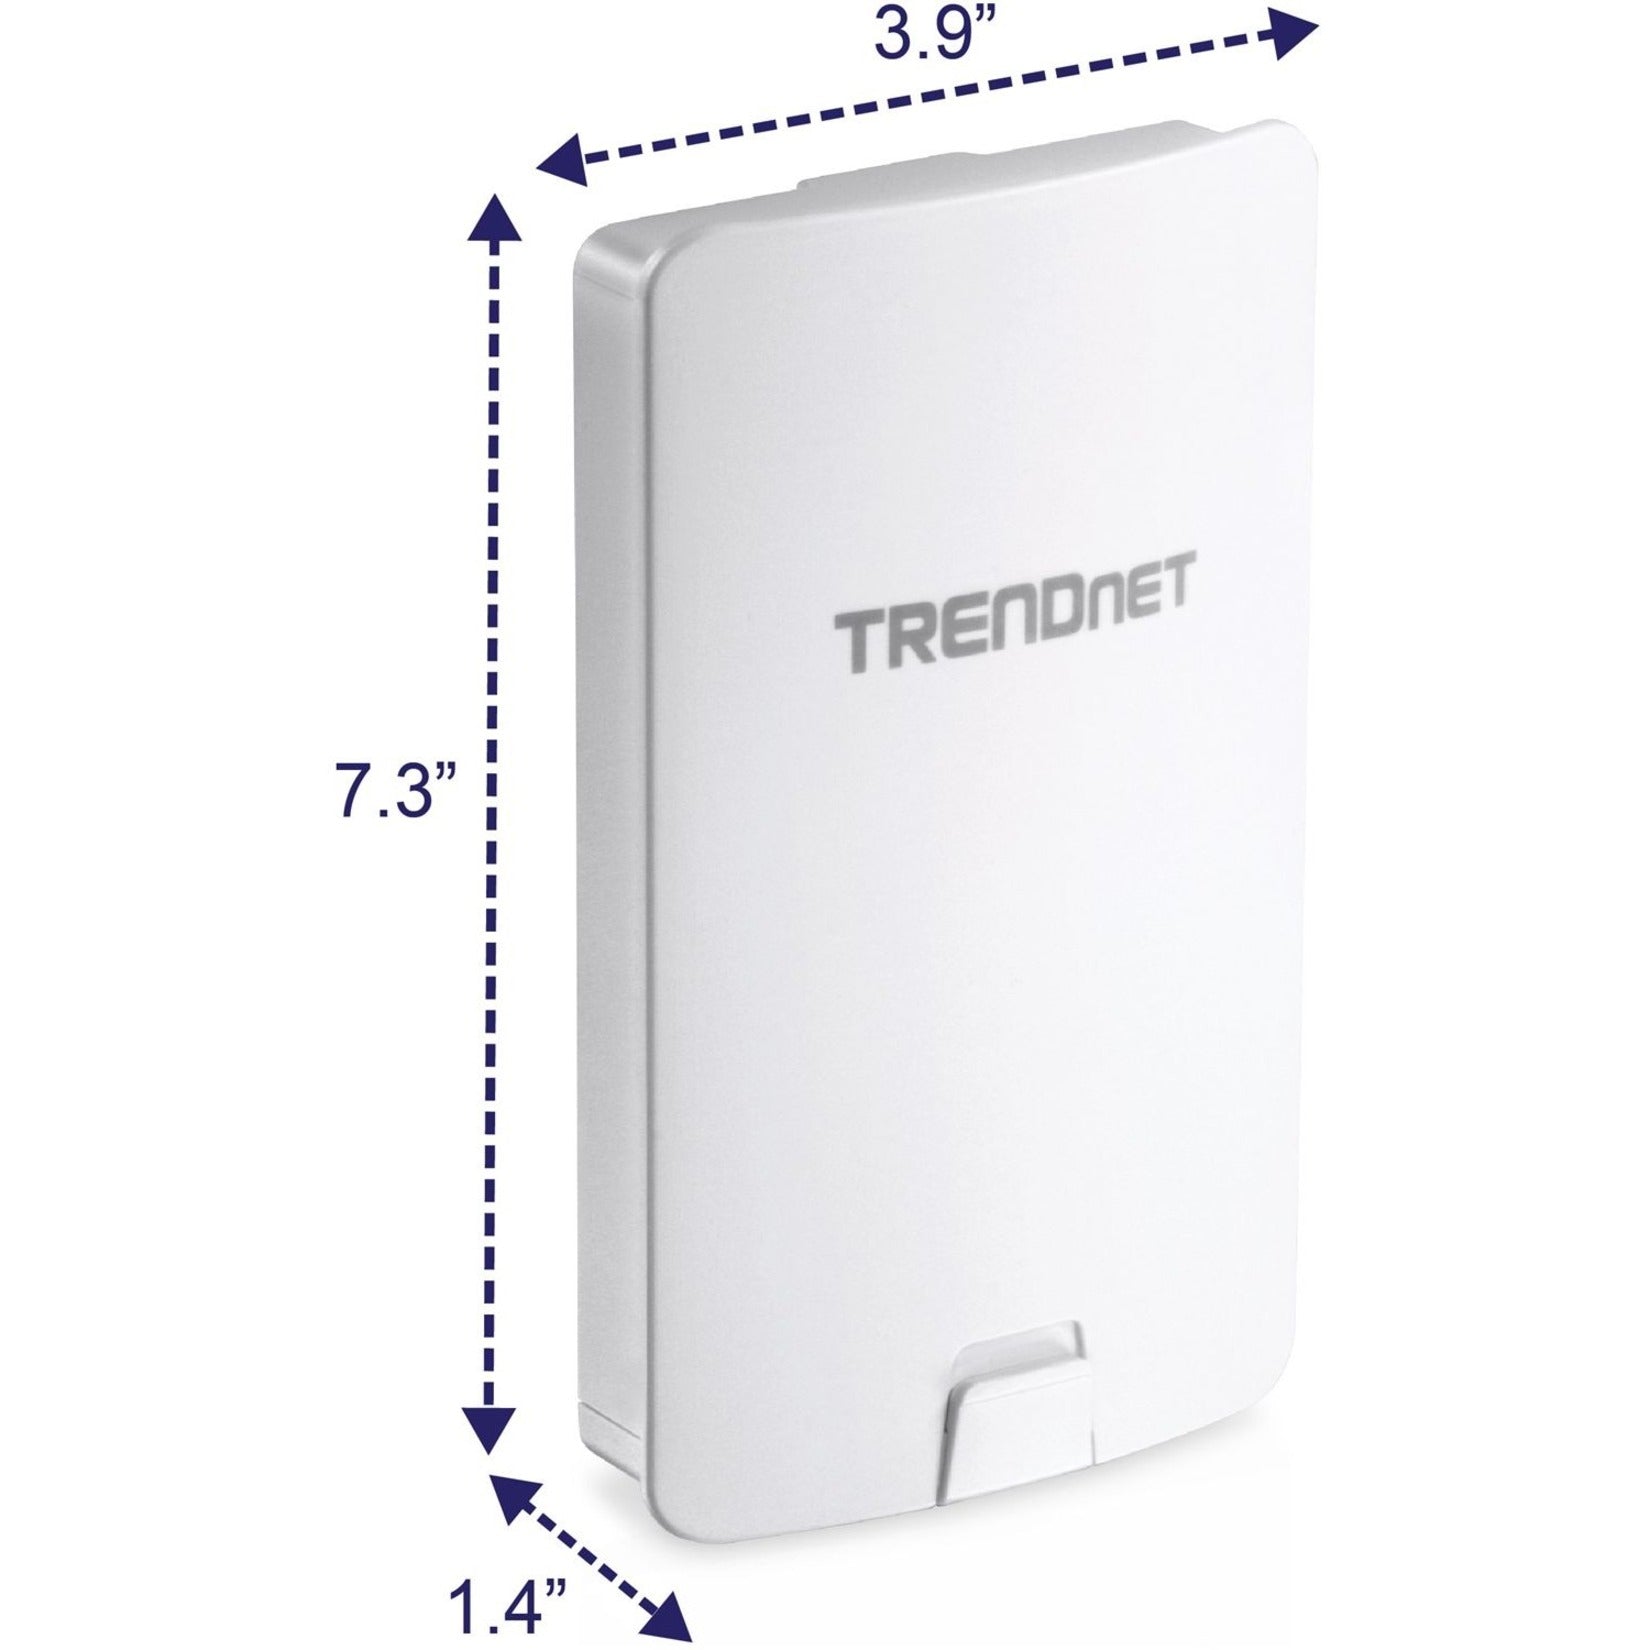 TRENDnet TEW-840APBO2K 14 dBI WiFi AC867 Outdoor Poe Preconfigured Point-to-Point Bridge Kit, 5GHz, Gigabit Ethernet, 867 Mbit/s